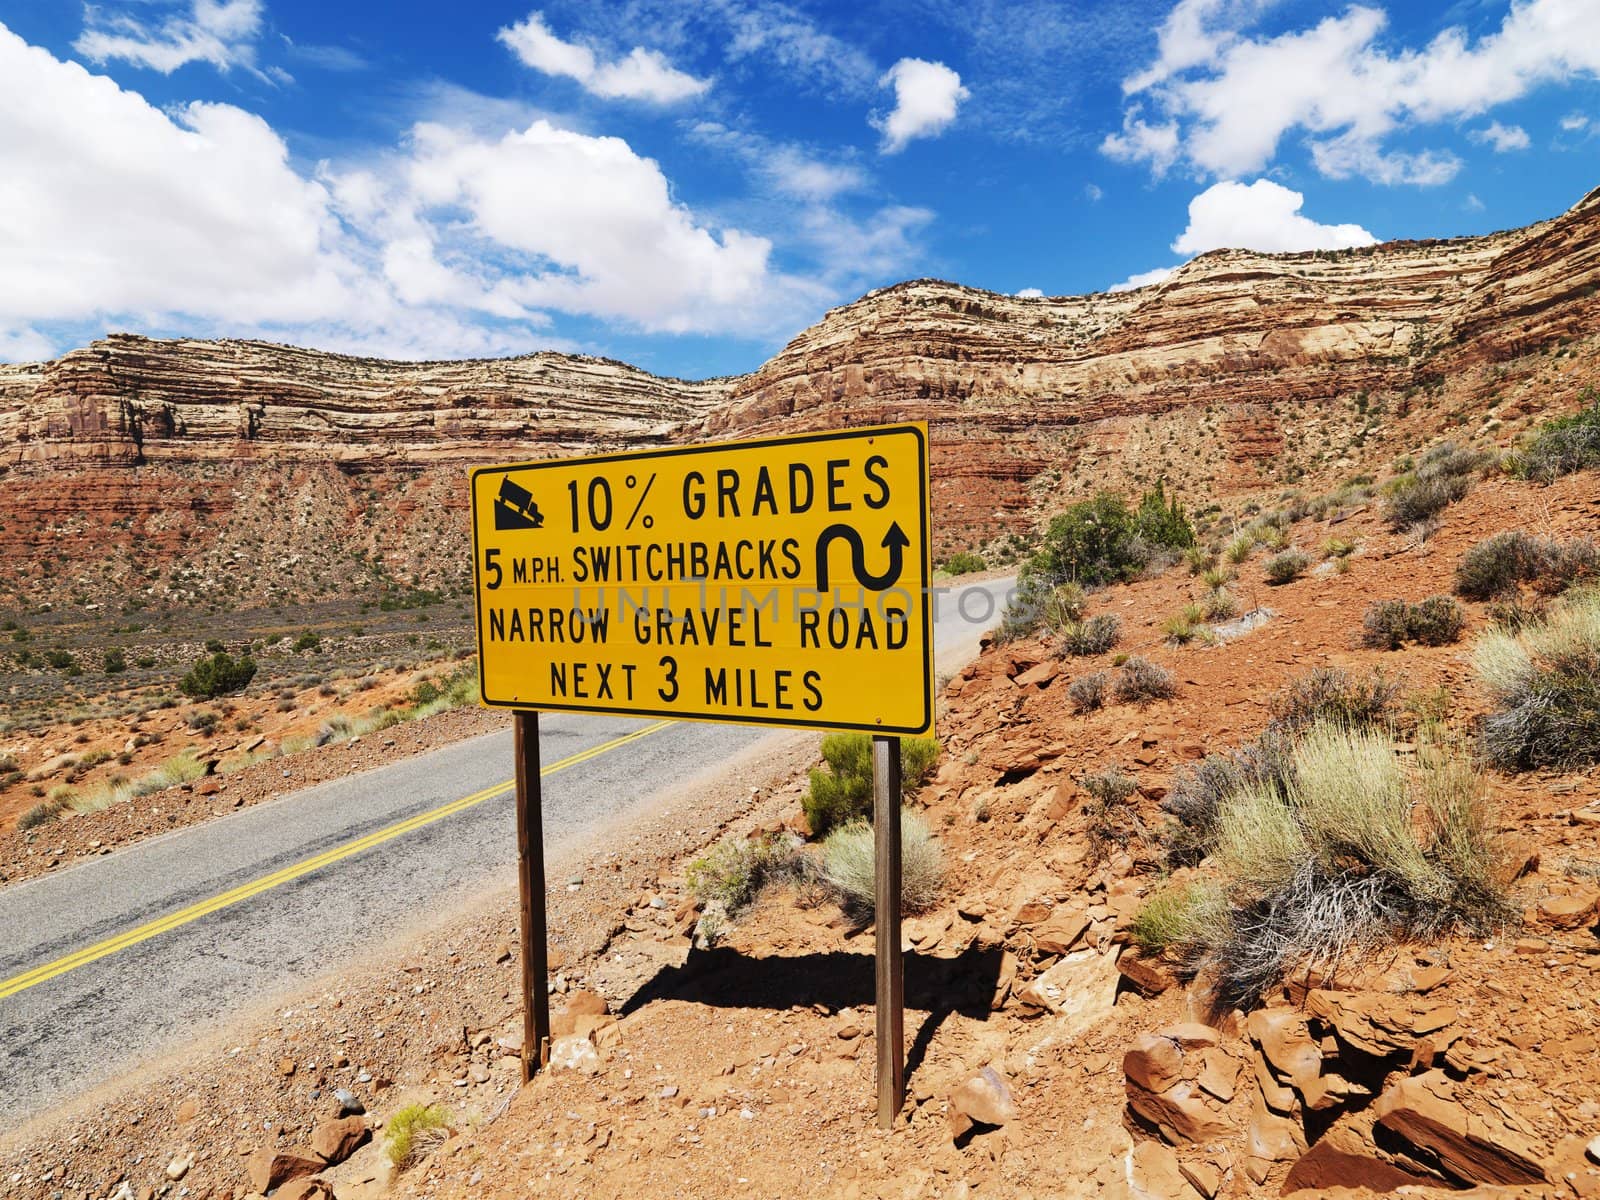 Road sign warning steep grade in mountainous Utah landscape.